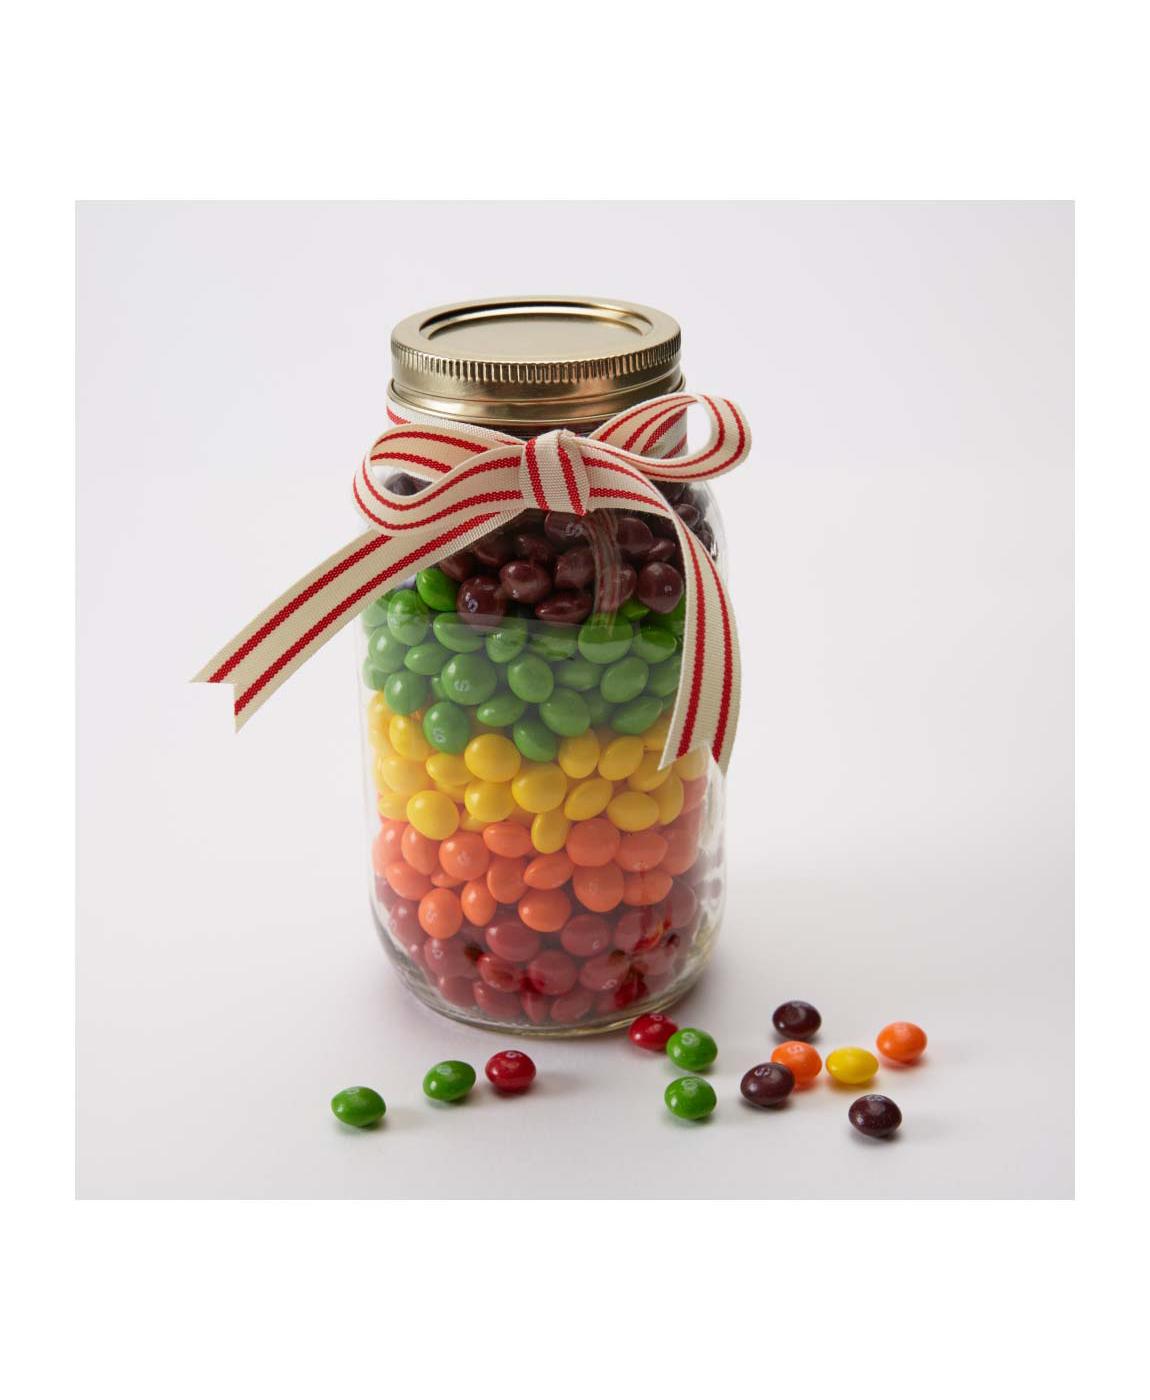 Skittles Original Candy Bag; image 8 of 11